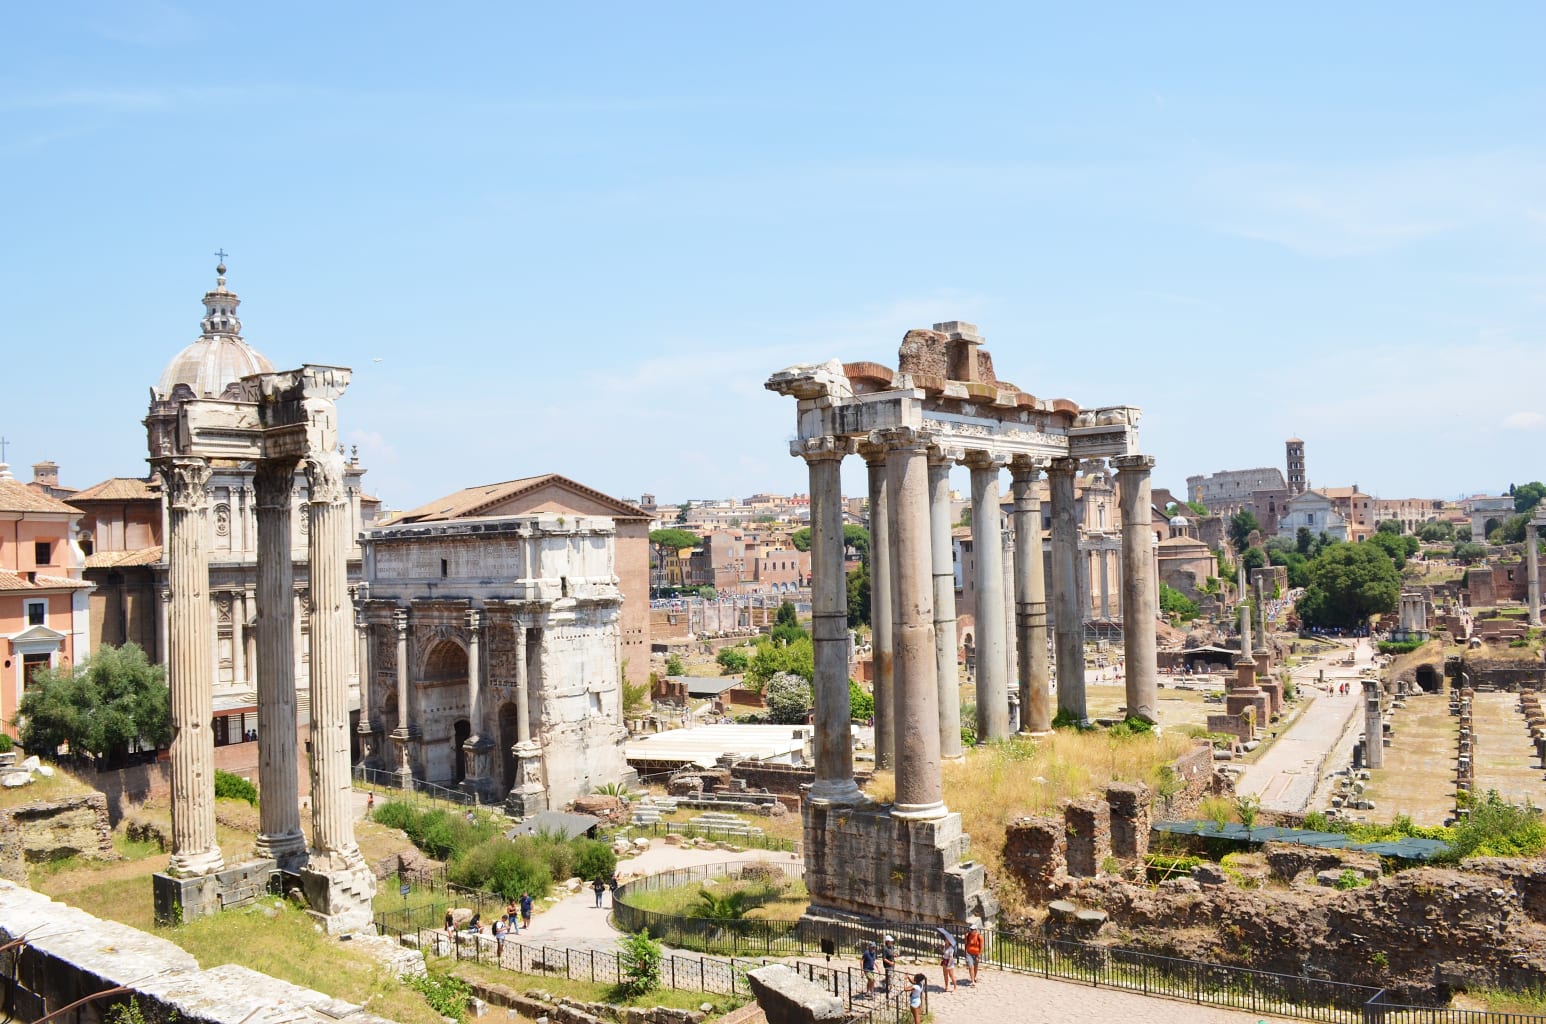 The Forum of Caesar in Rome, Italy.